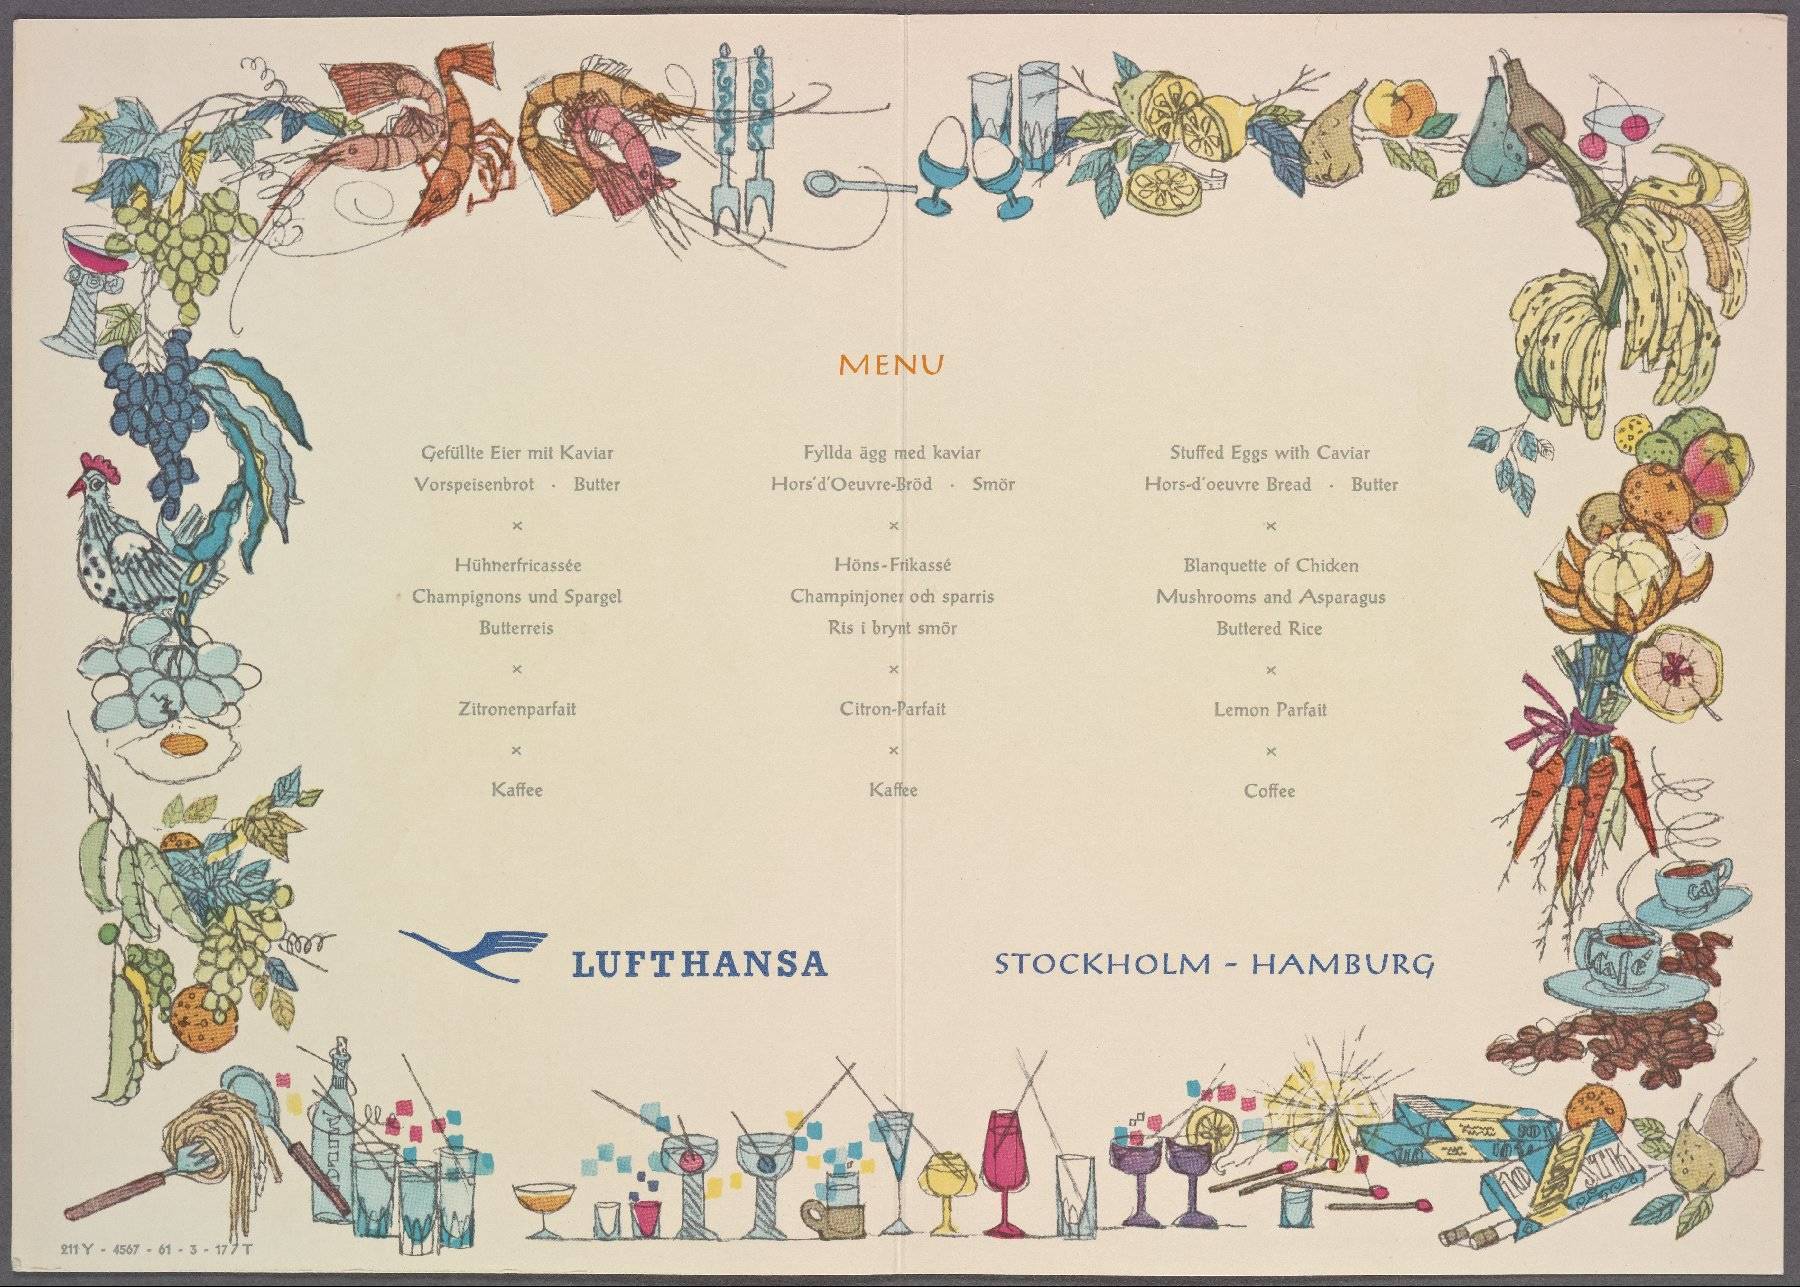 Lufthansa 1960 menu